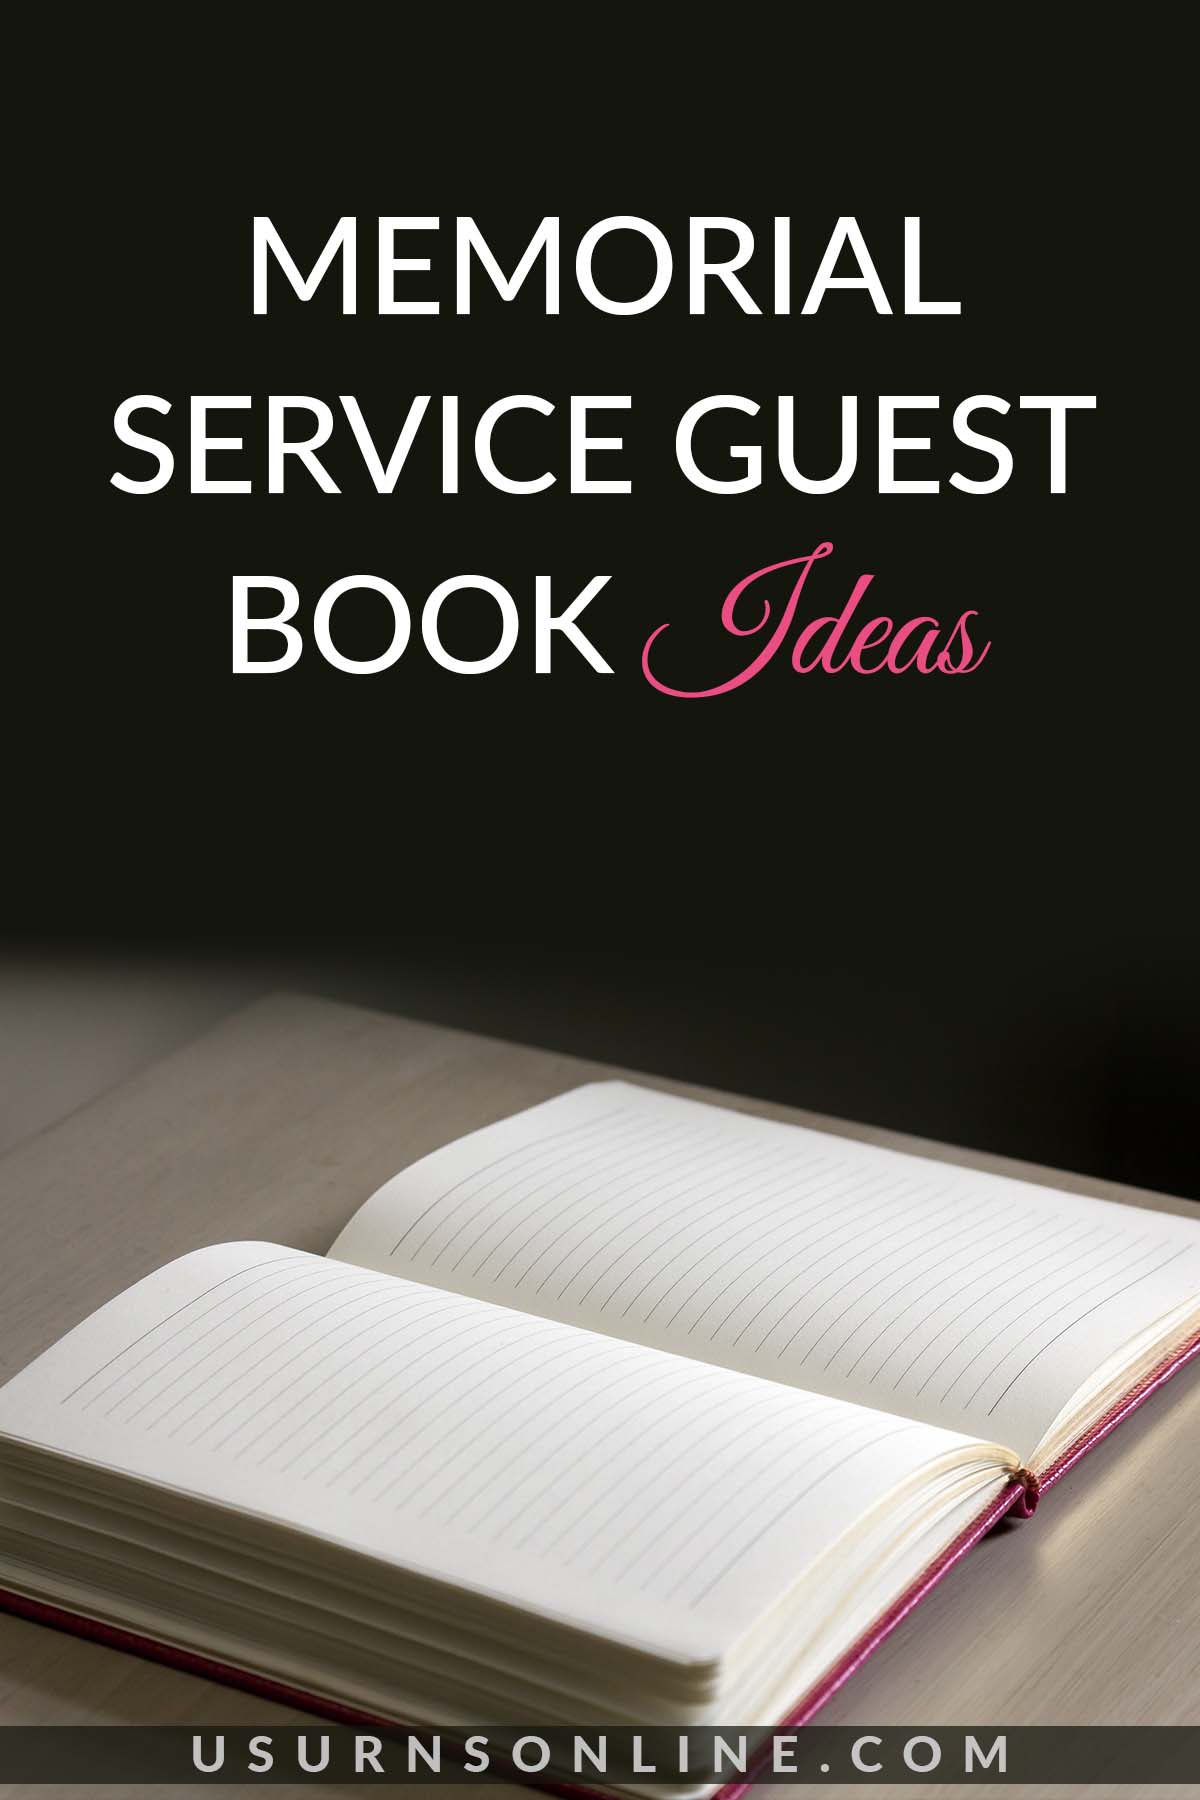 18 Totally Unique Memorial Service Guest Book Ideas